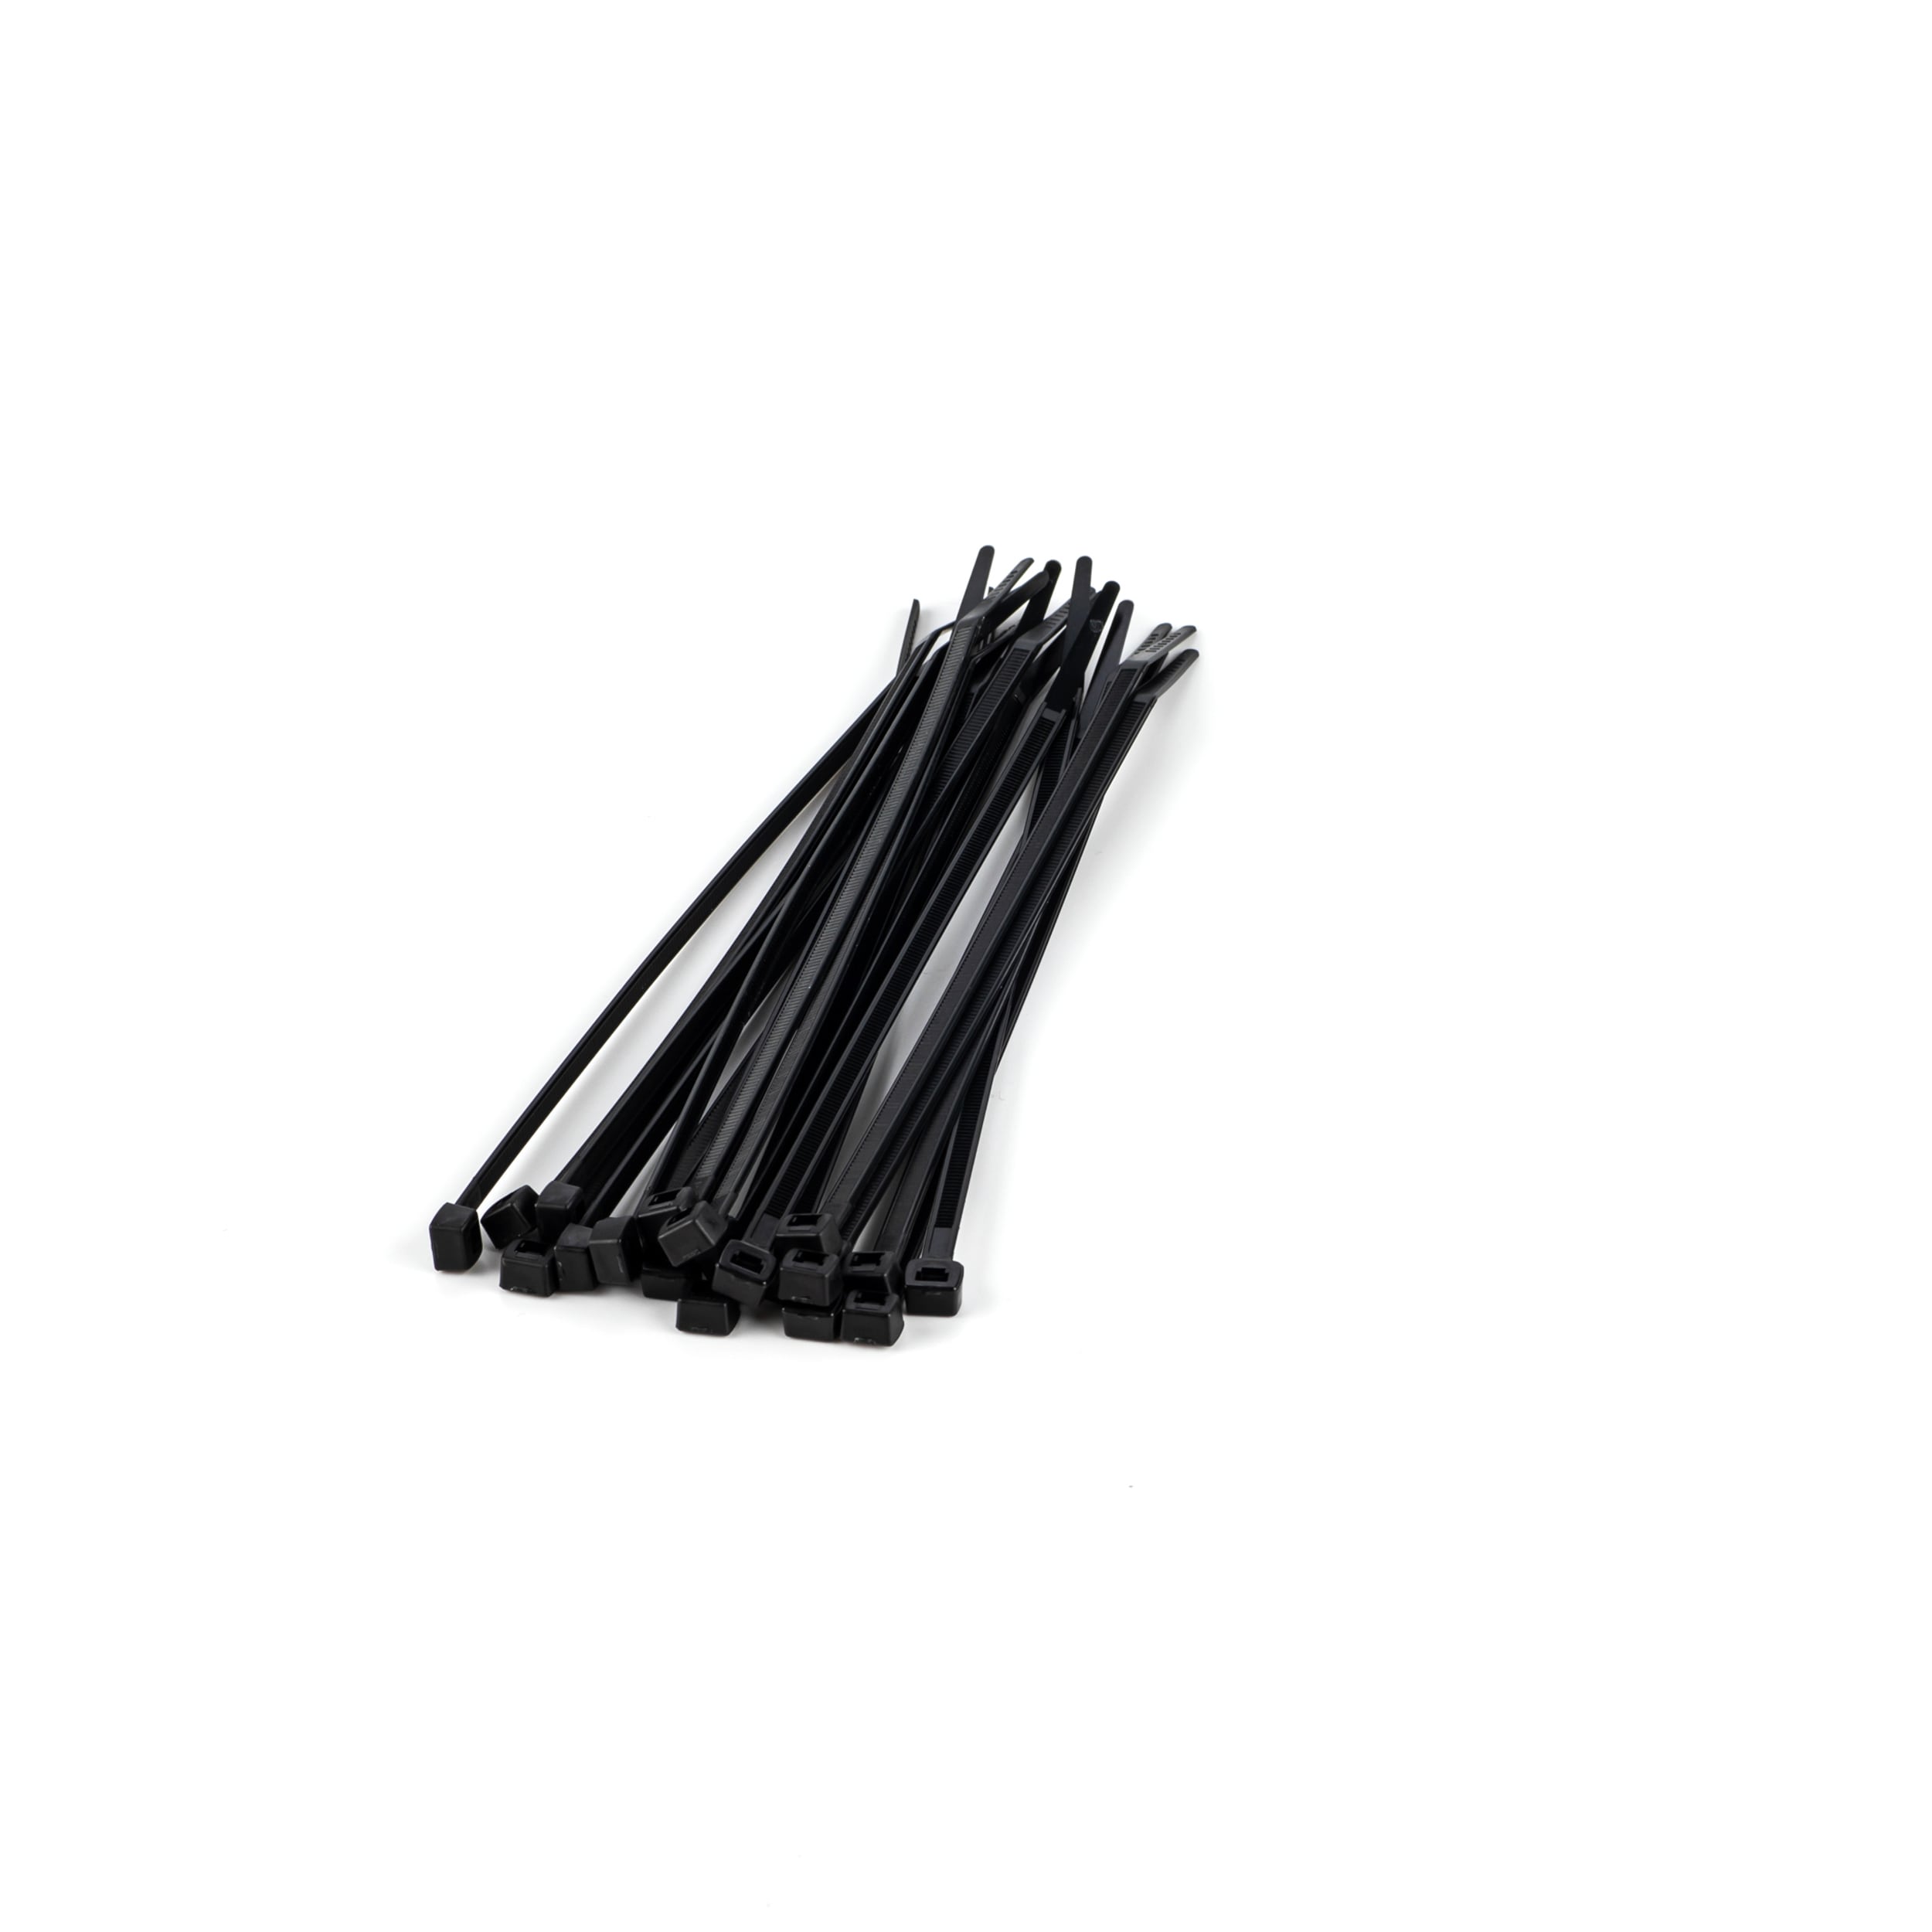 Metric 364 x 4.8 Material Nylon 6/6  1000 pcs 14 inch 50 lb Black Uv Cable Tie 